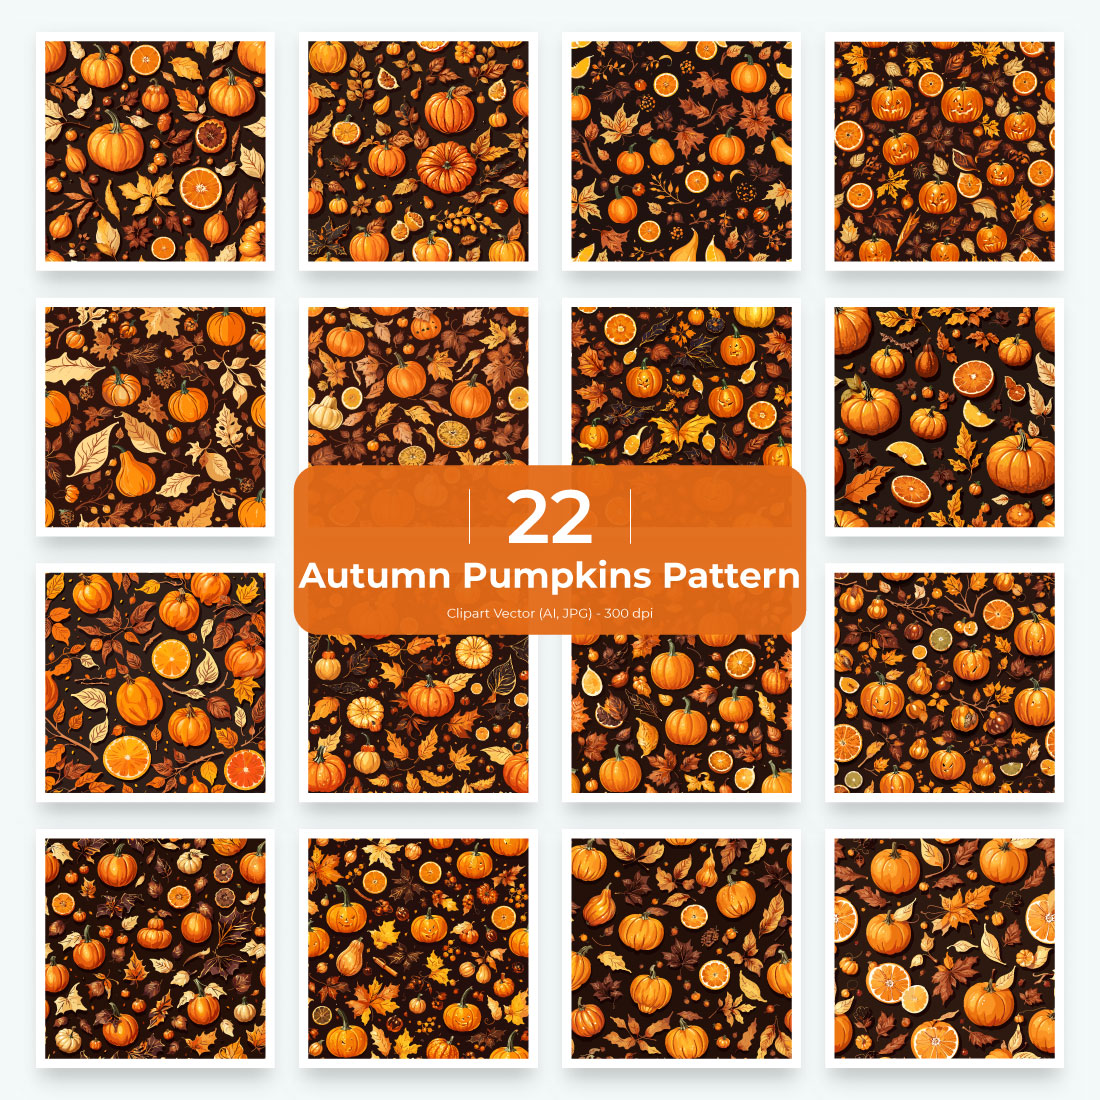 Watercolor Autumn Pumpkins Pattern cover image.